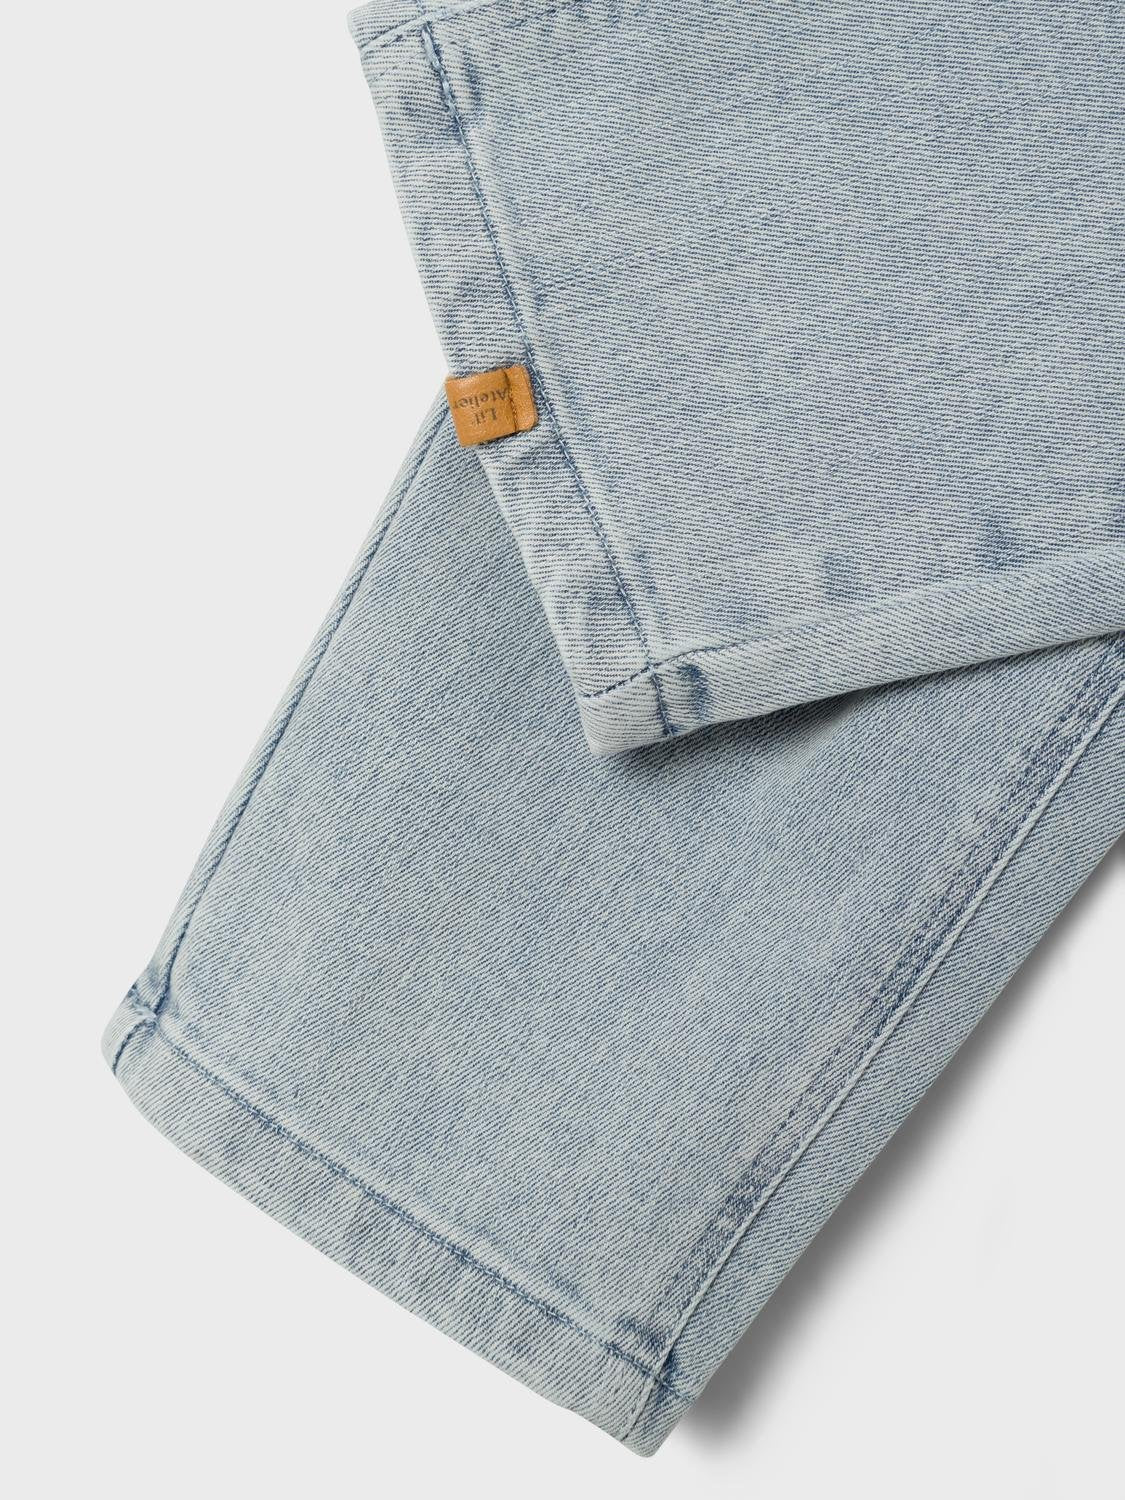 Lil atelier - Jeans tapered - Light medium denim